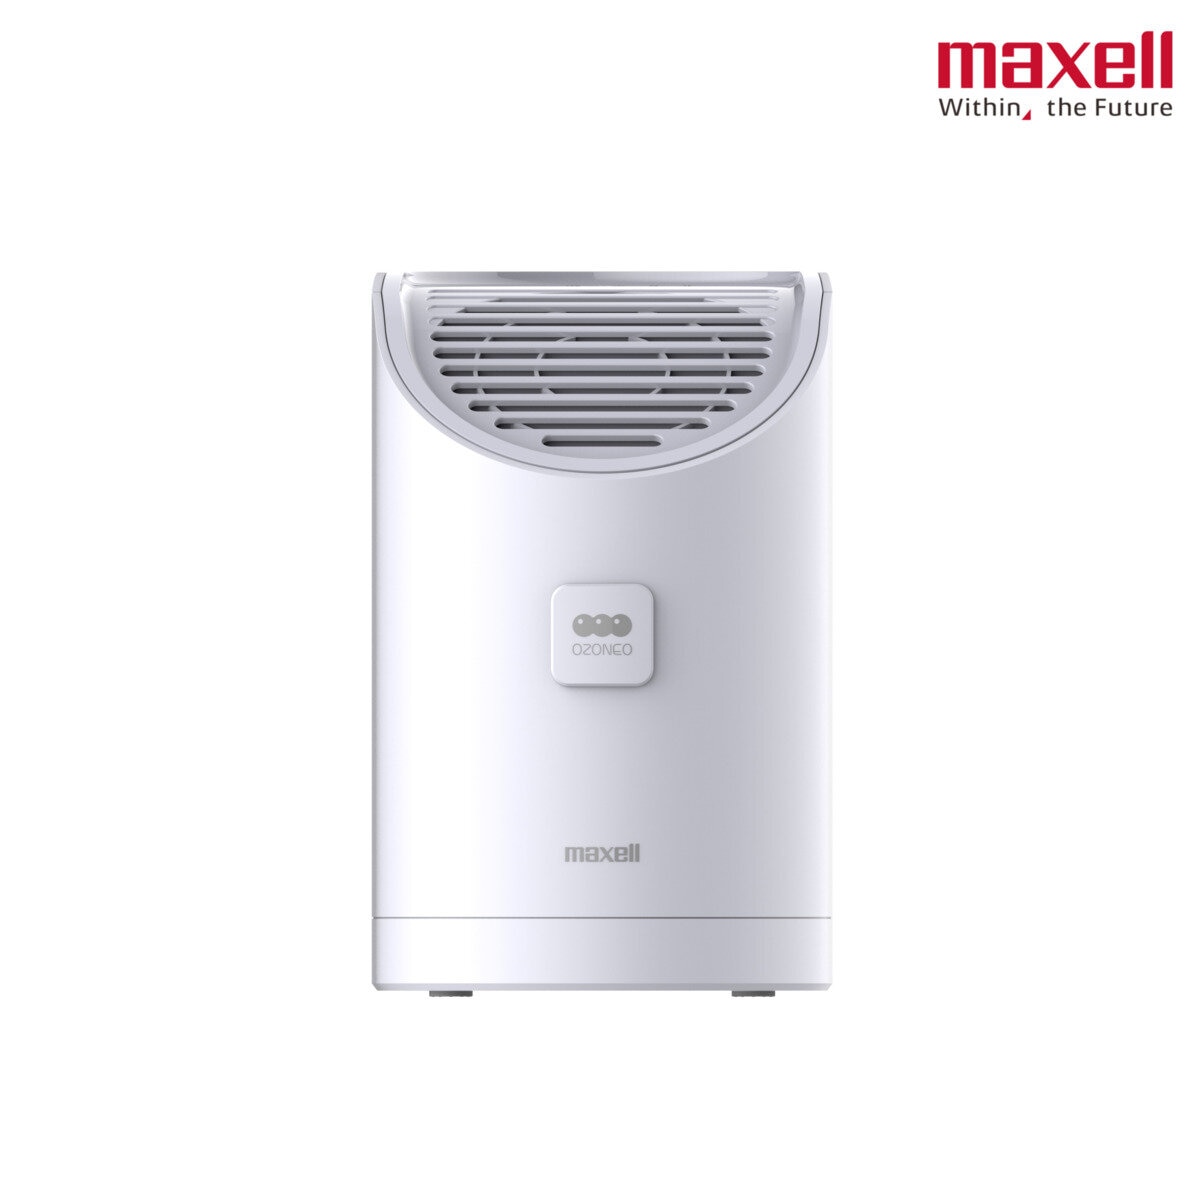 maxell オゾネオ MXAP-AEA255 WHITE オゾン除菌 - 冷暖房/空調